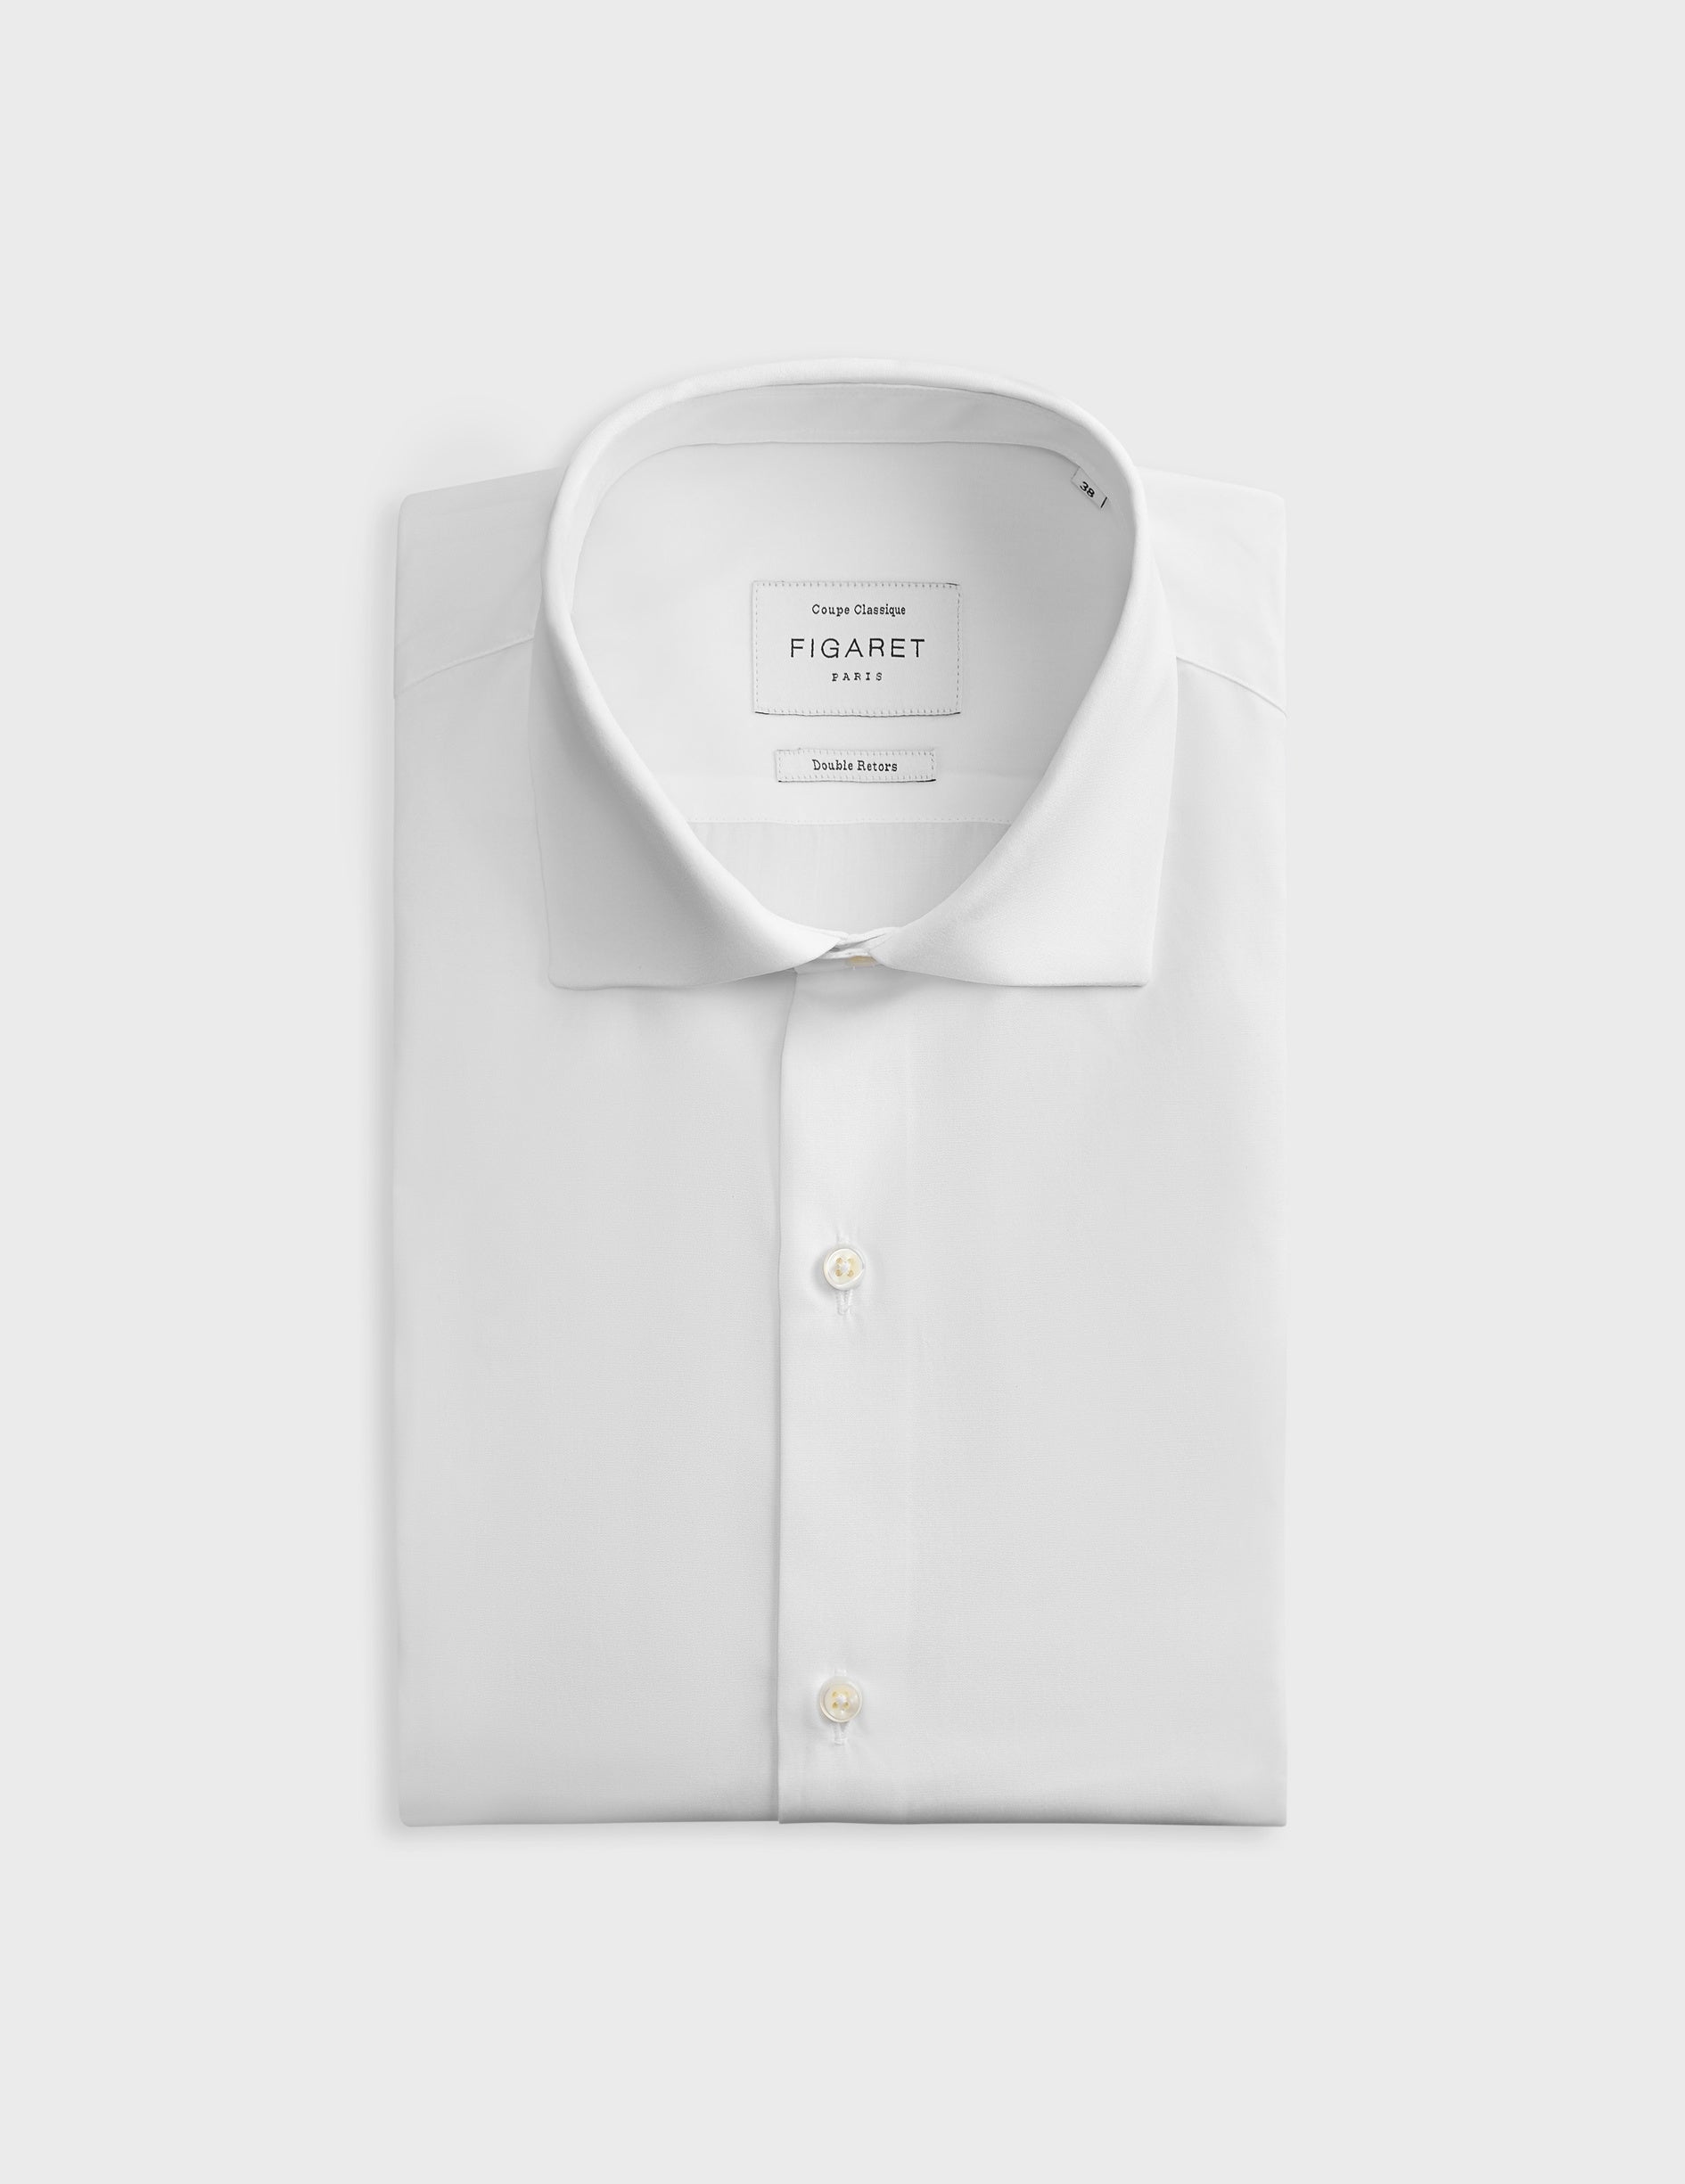 Classic white shirt - Poplin - Italian Collar - French Cuffs